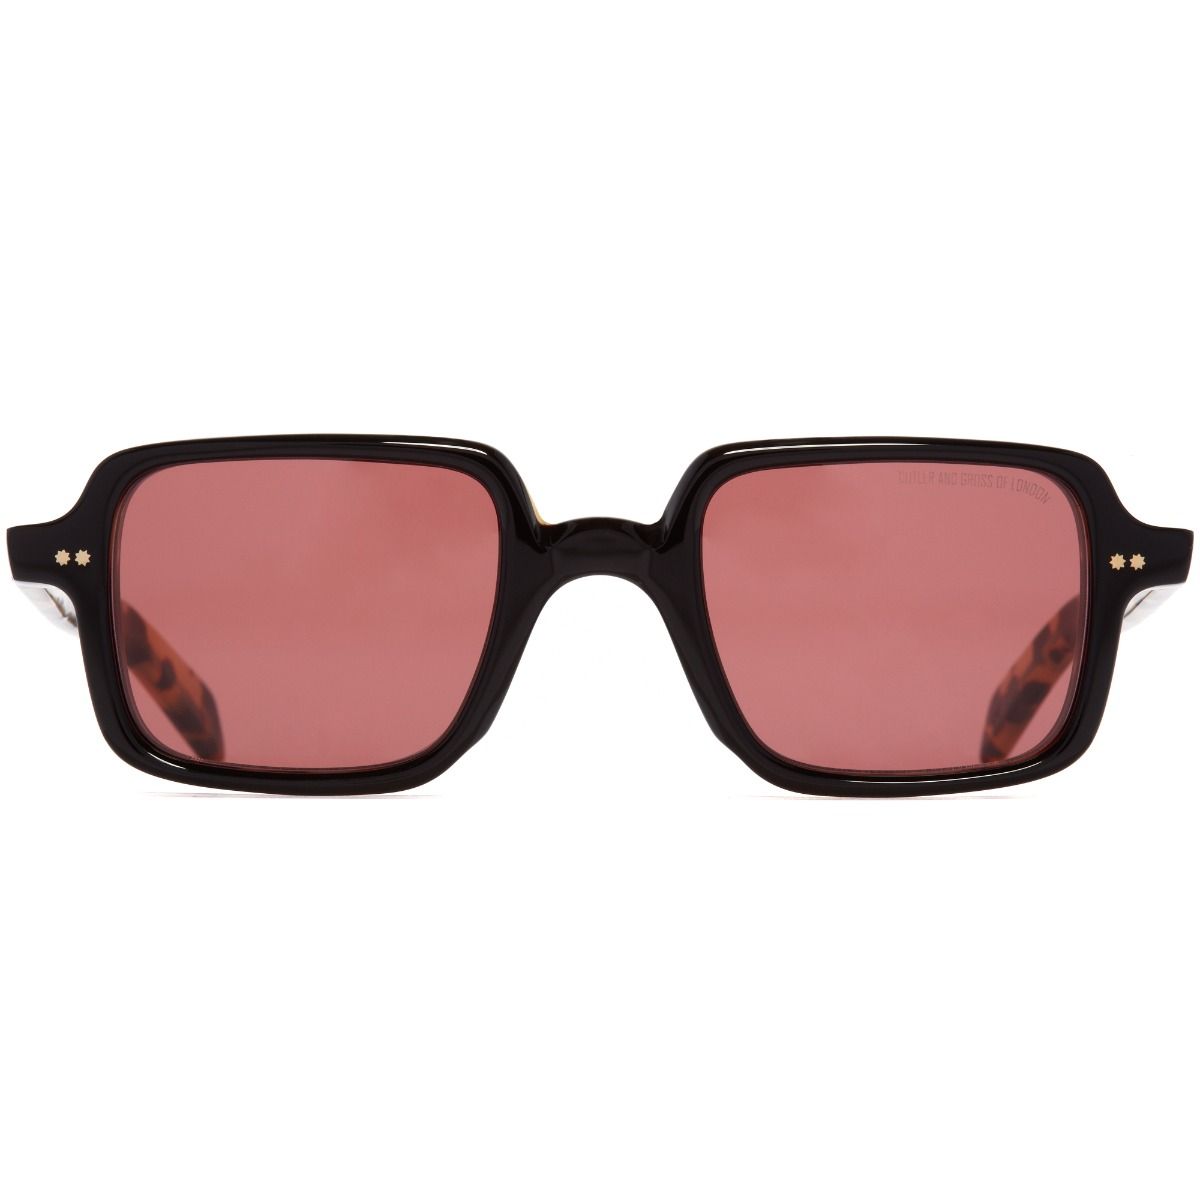 GR02 Rectangle Sunglasses-Black on Camo